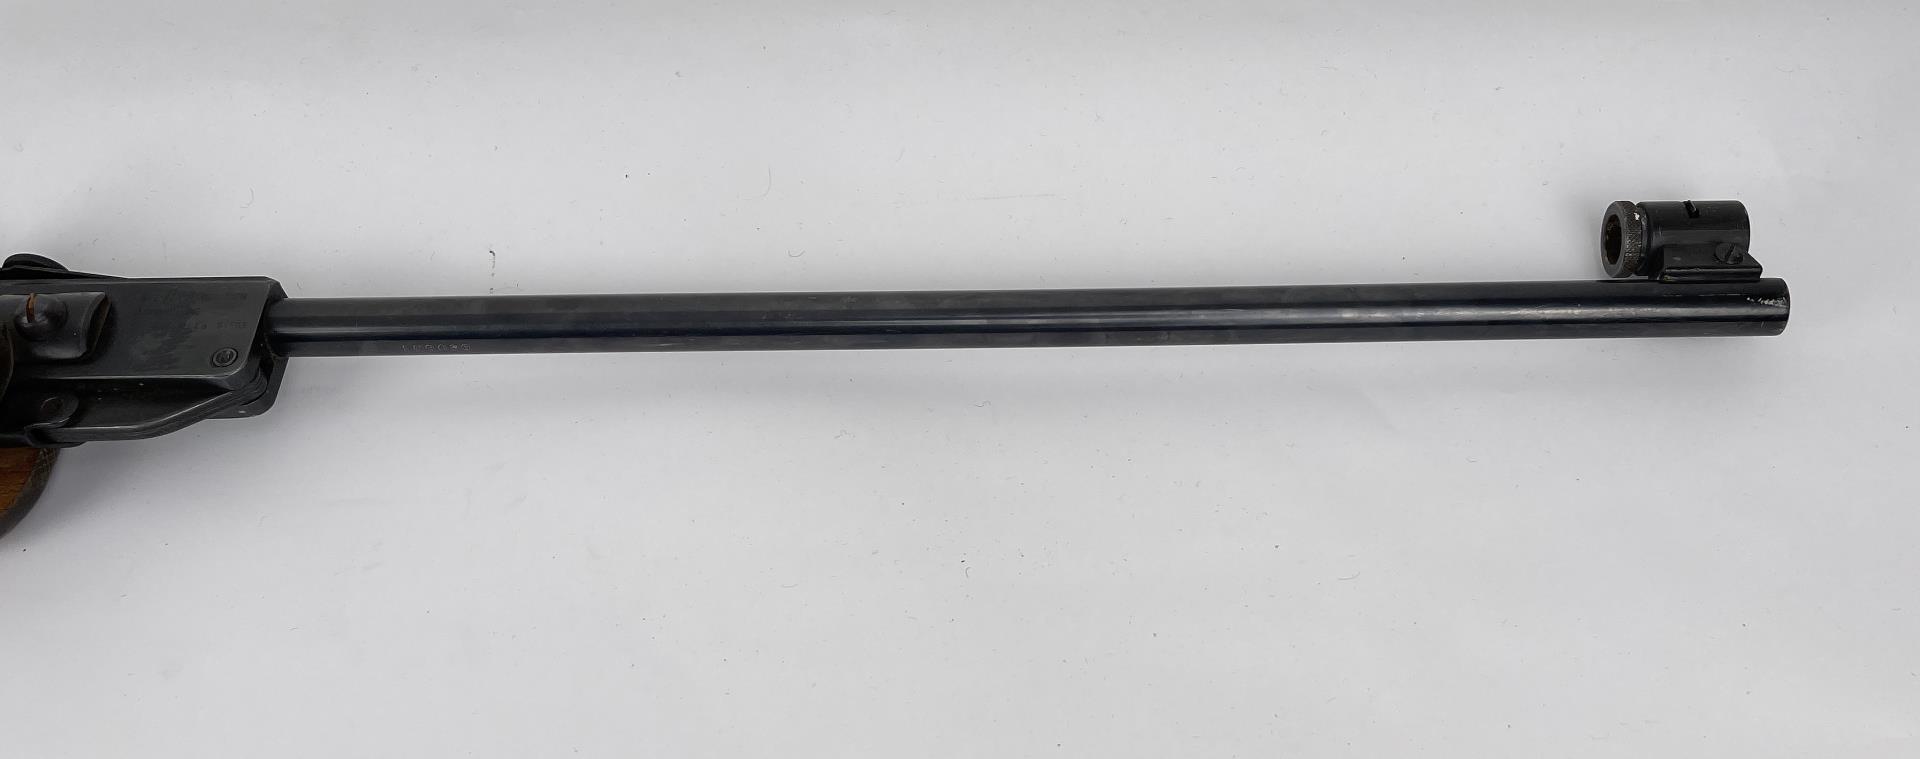 Weihrauch Hw50s German Air Pellet Rifle